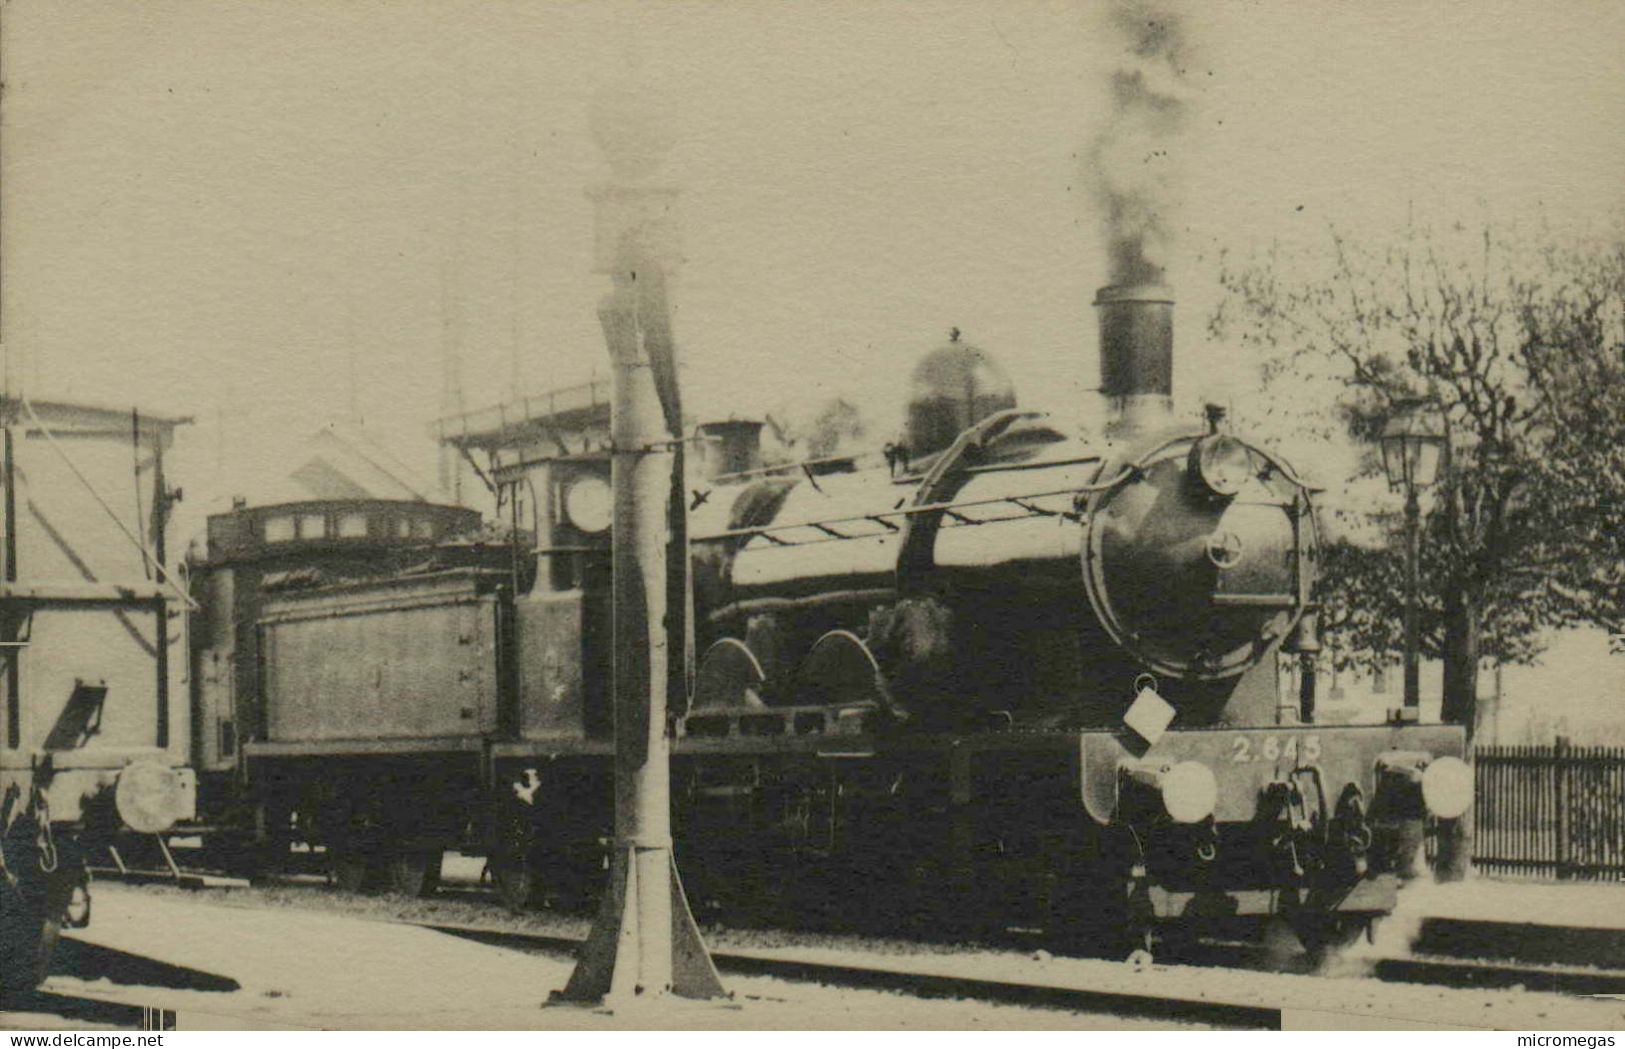 Reproduction - Locomotive 2-645 - Trains